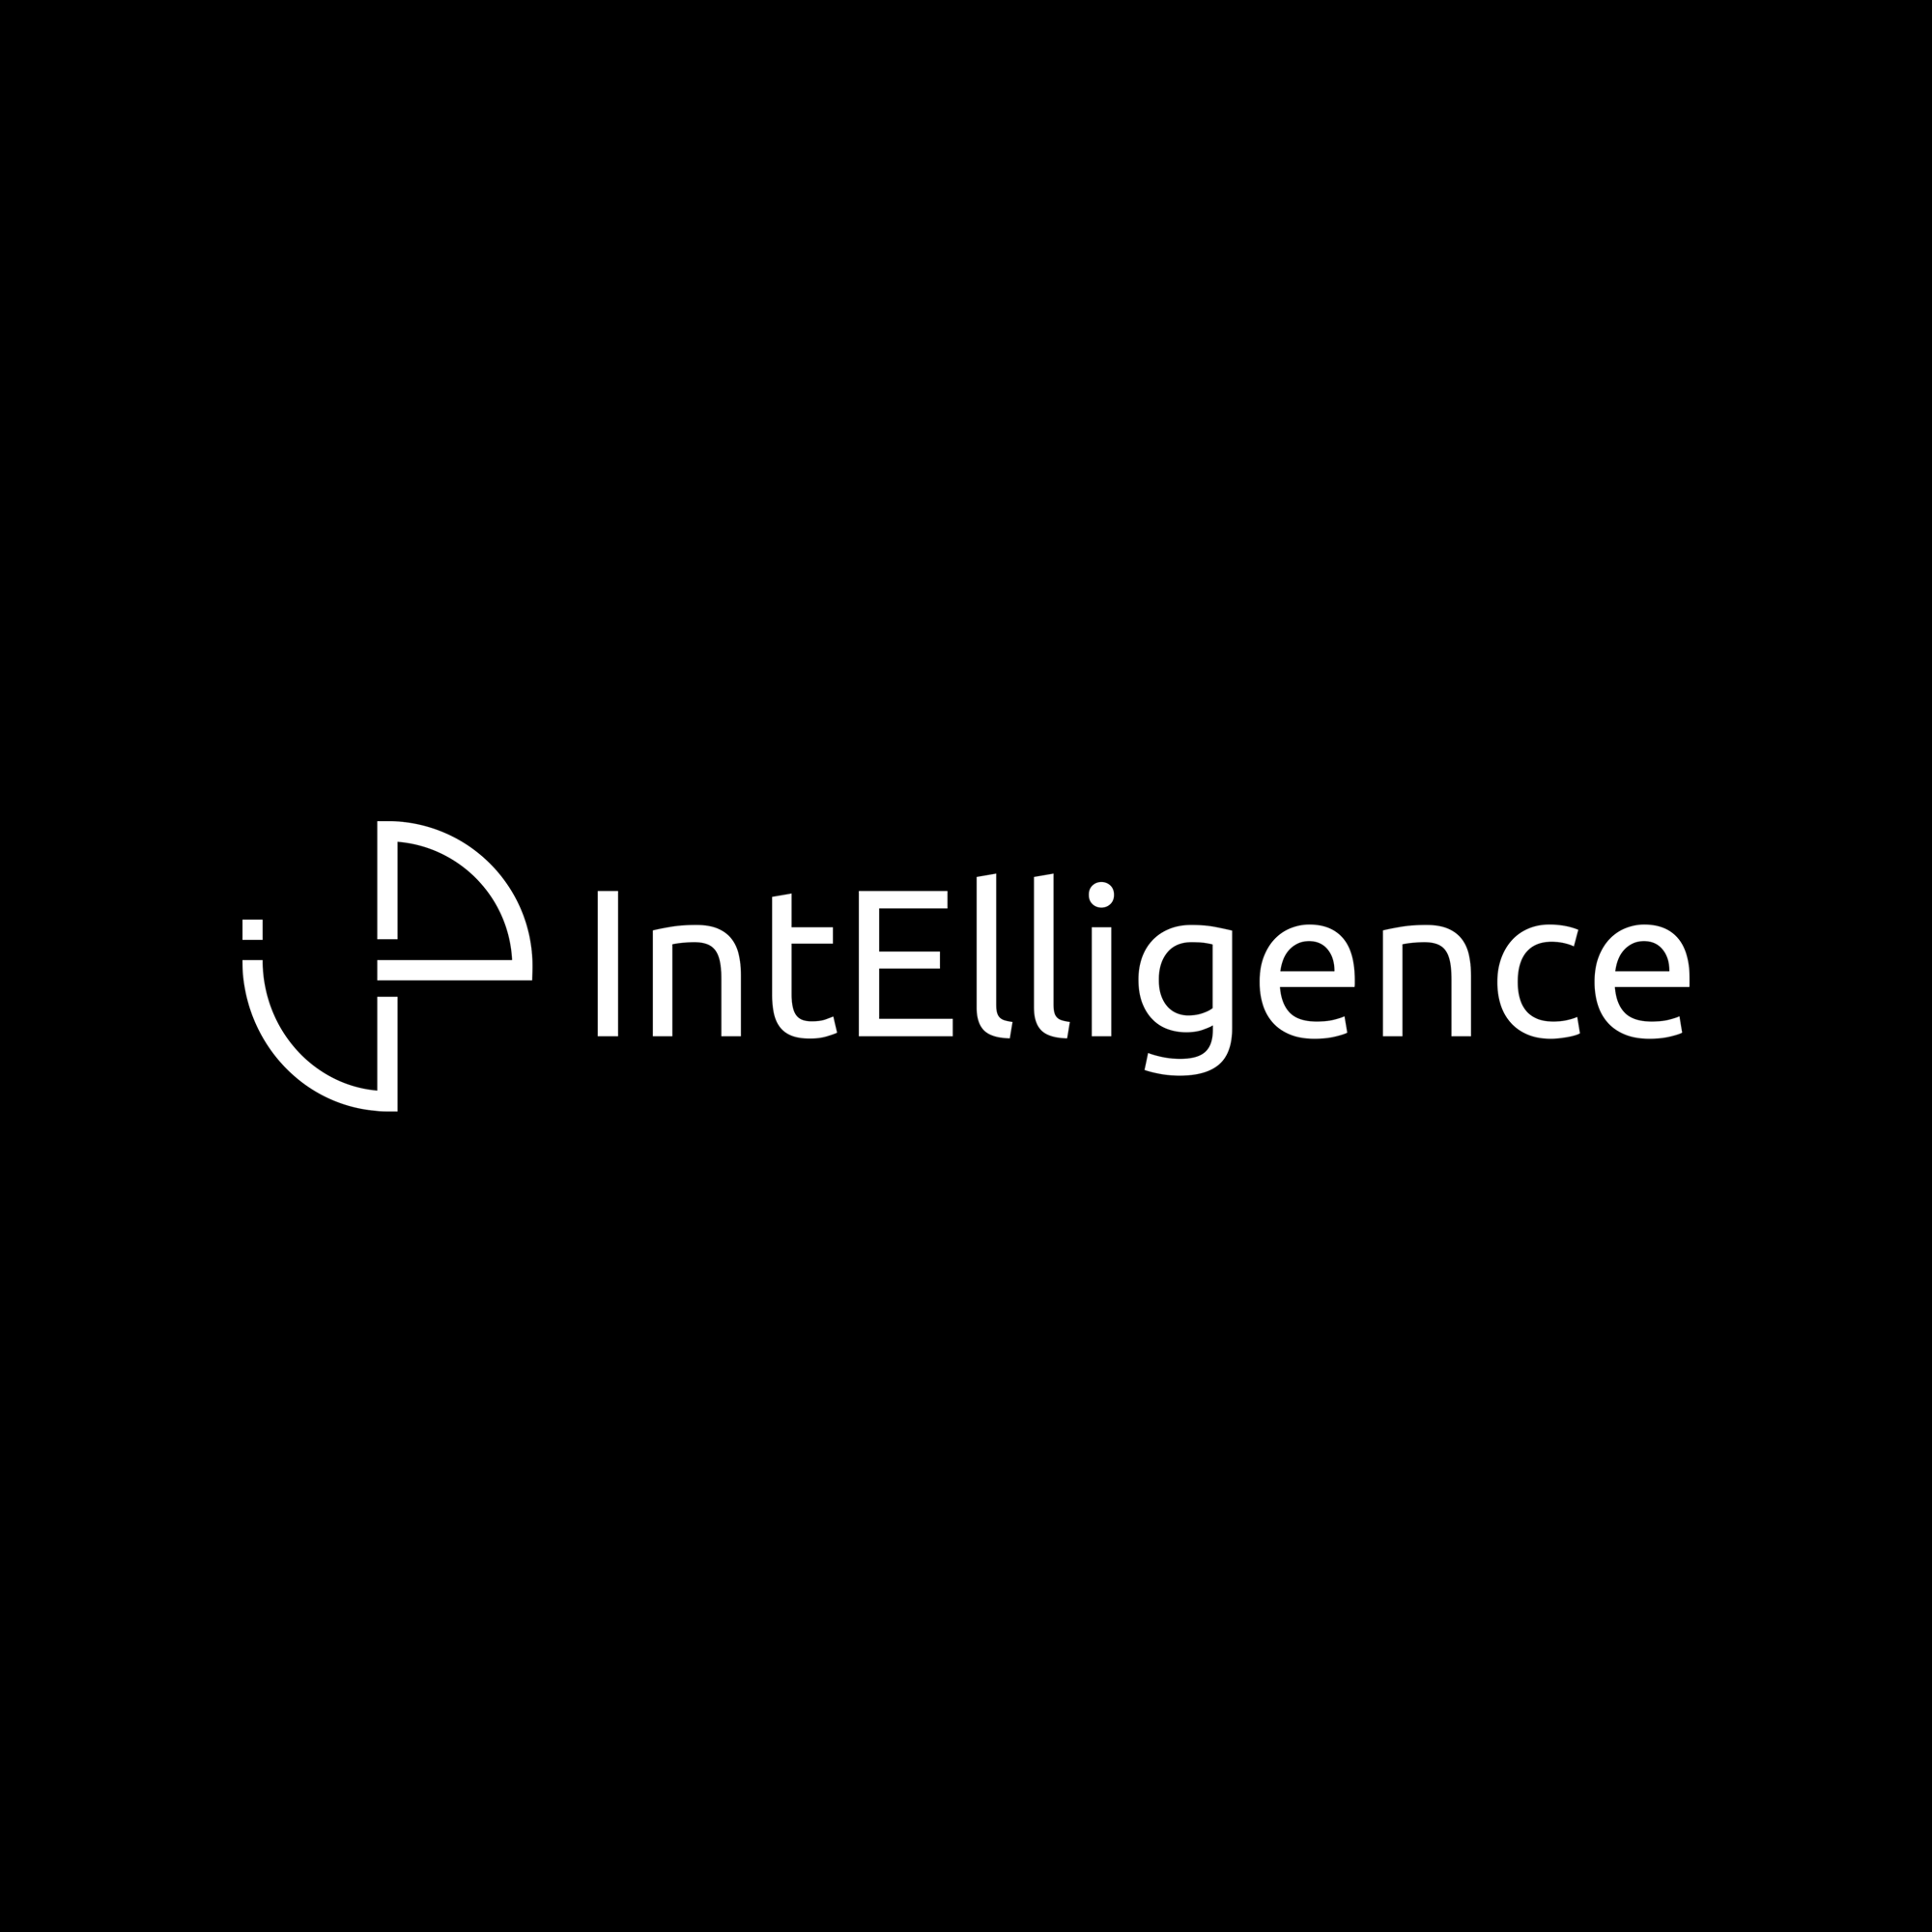 IntElligence Software Development